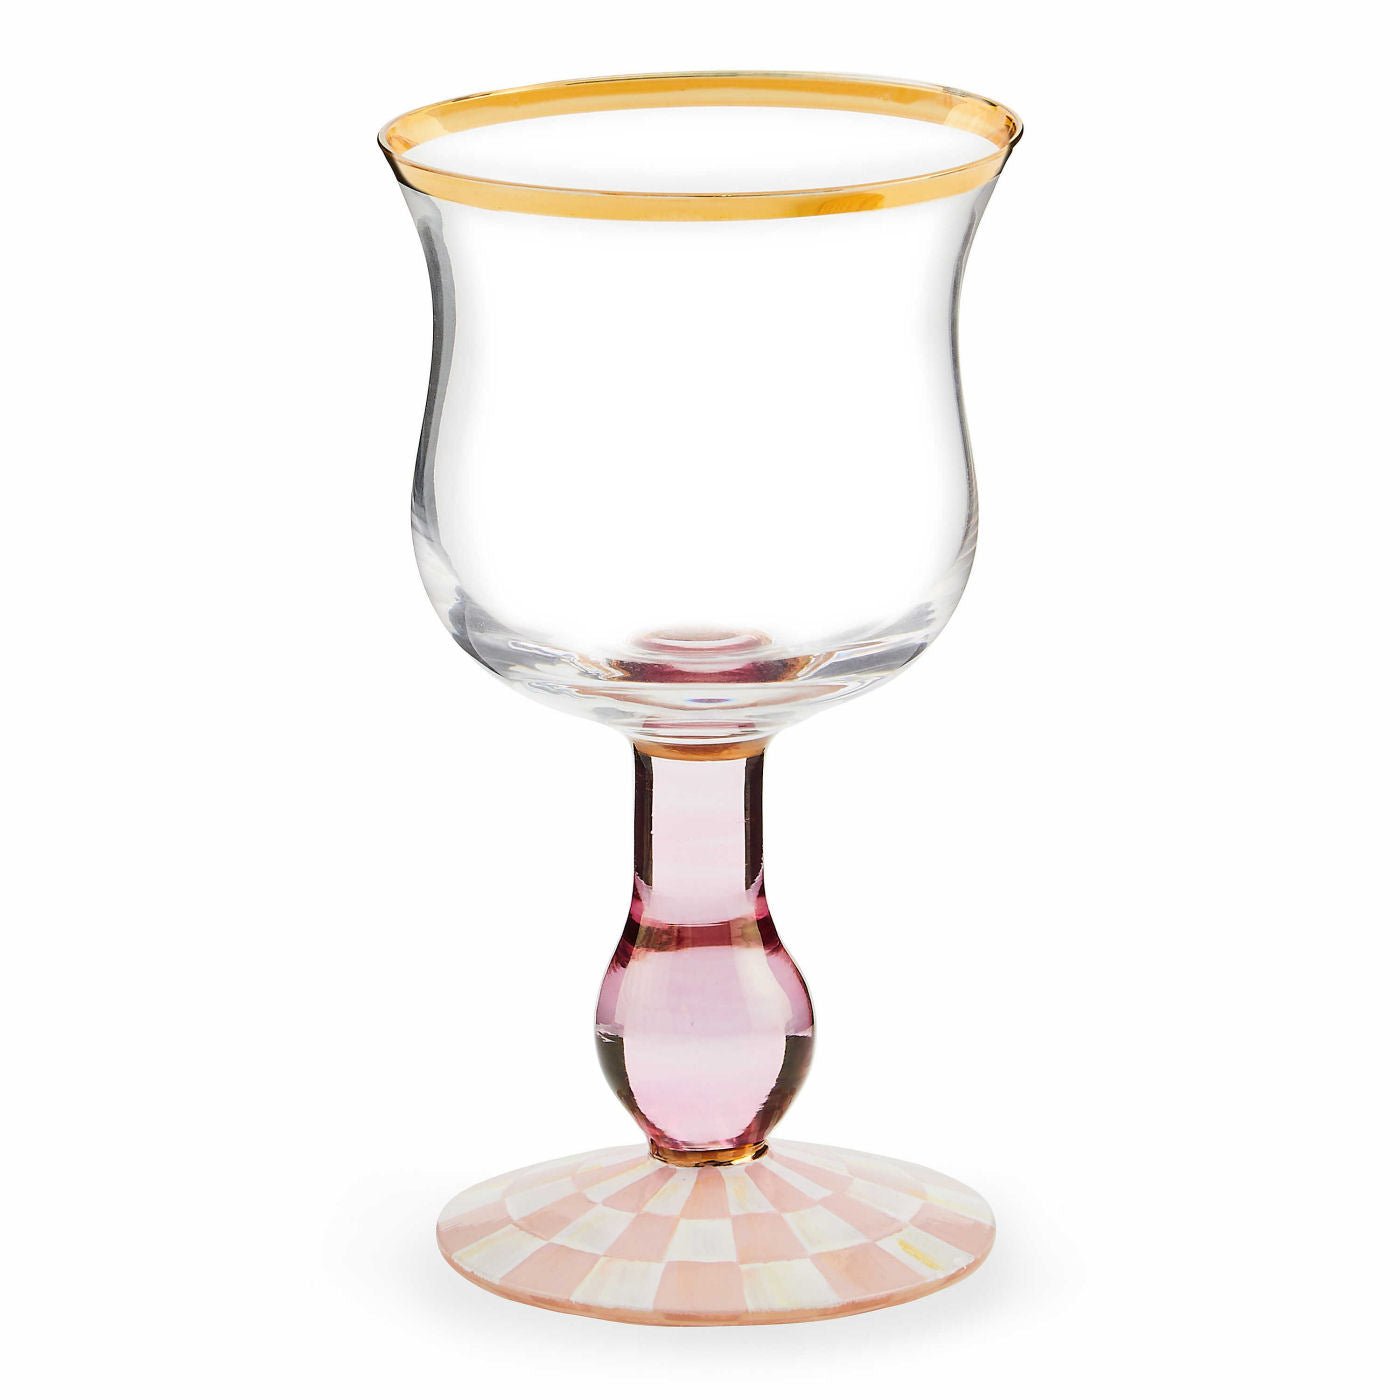 MacKenzie-Childs Rosy Check Wine Glass - |VESIMI Design| Luxury Bathrooms and Home Decor